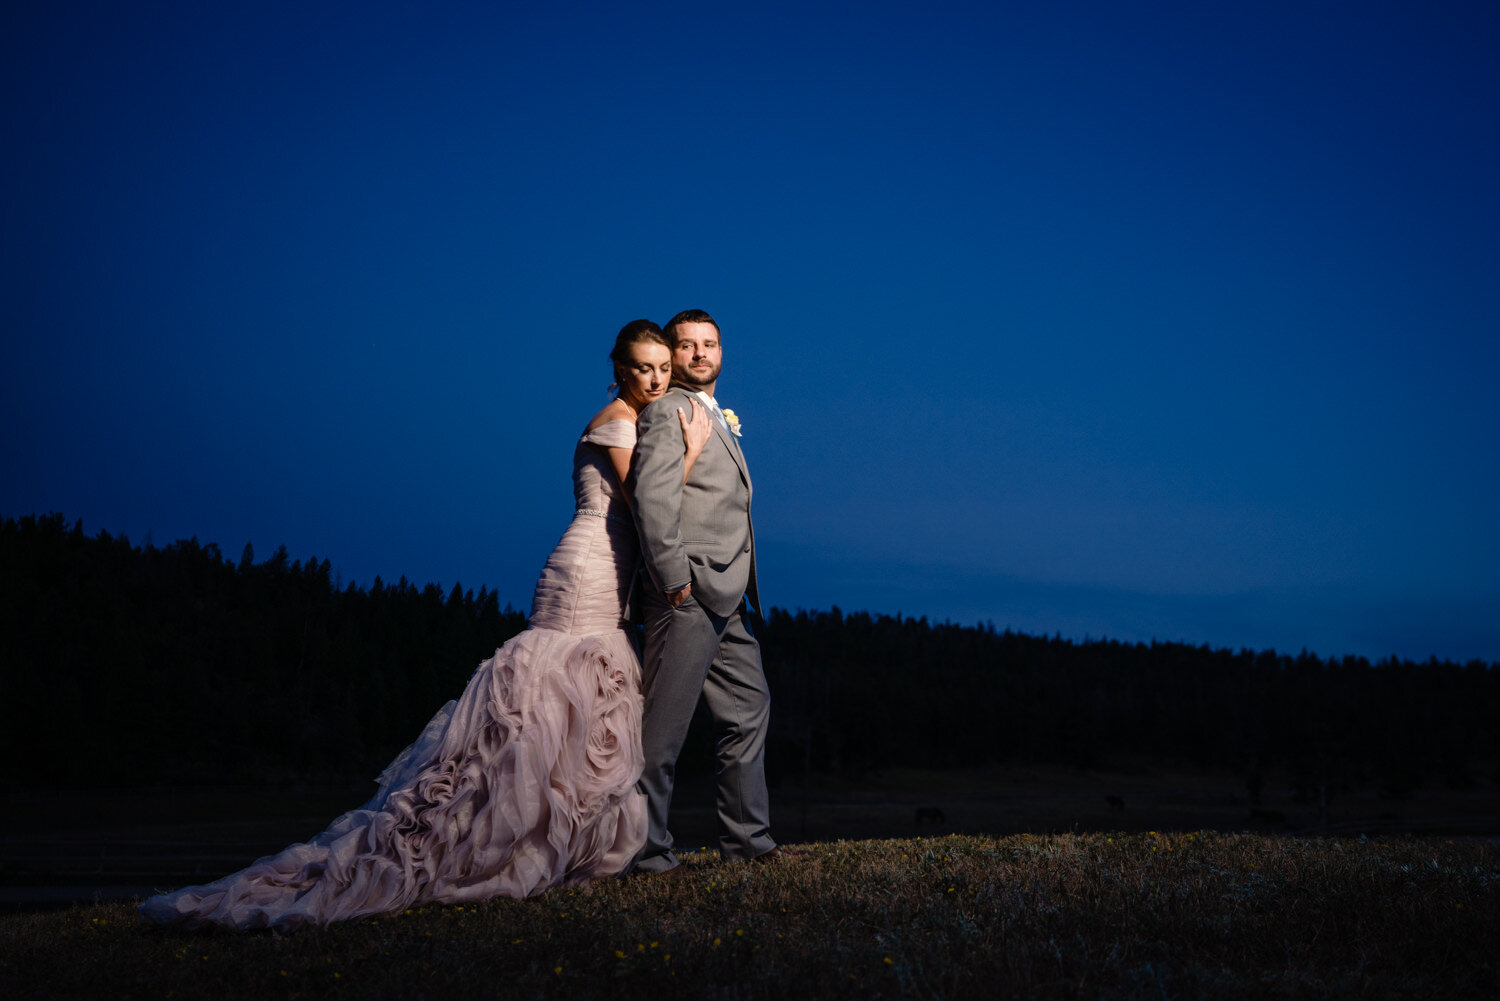  Stove Prairie Ranch Wedding | Fort Collins Wedding Photographer | JMGant Photography 